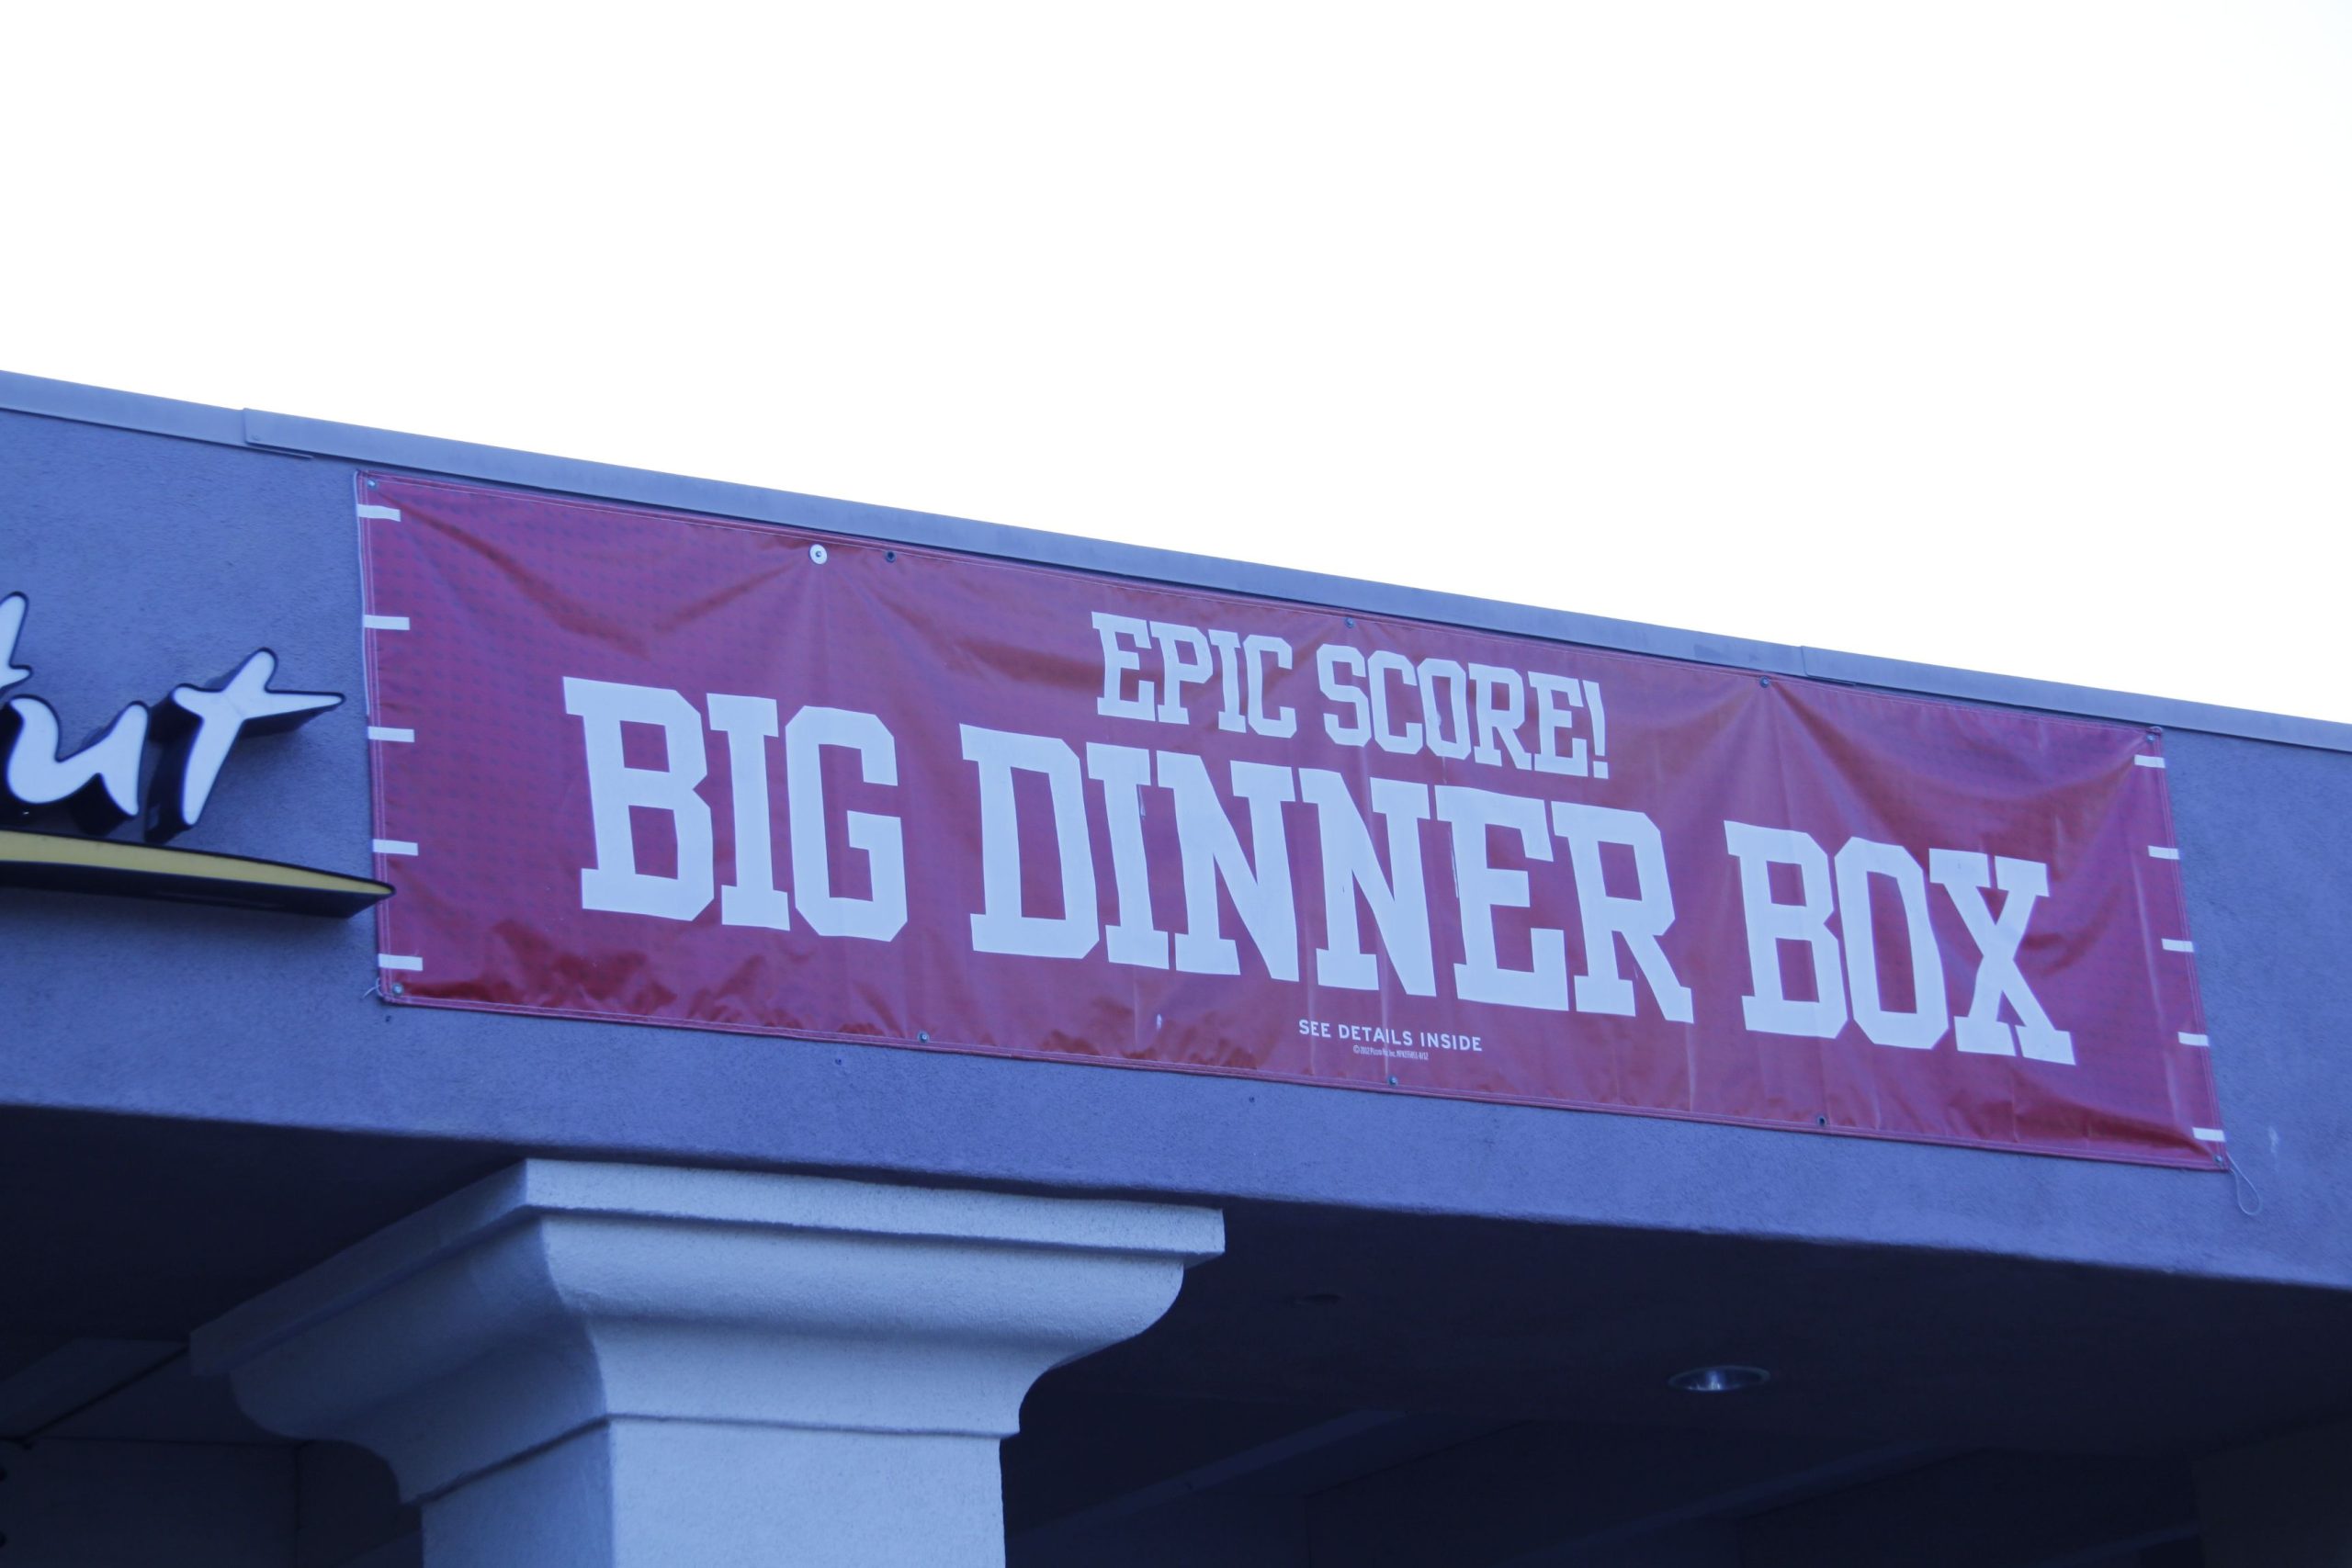 "Epic Score! Big Dinner Box" banner.